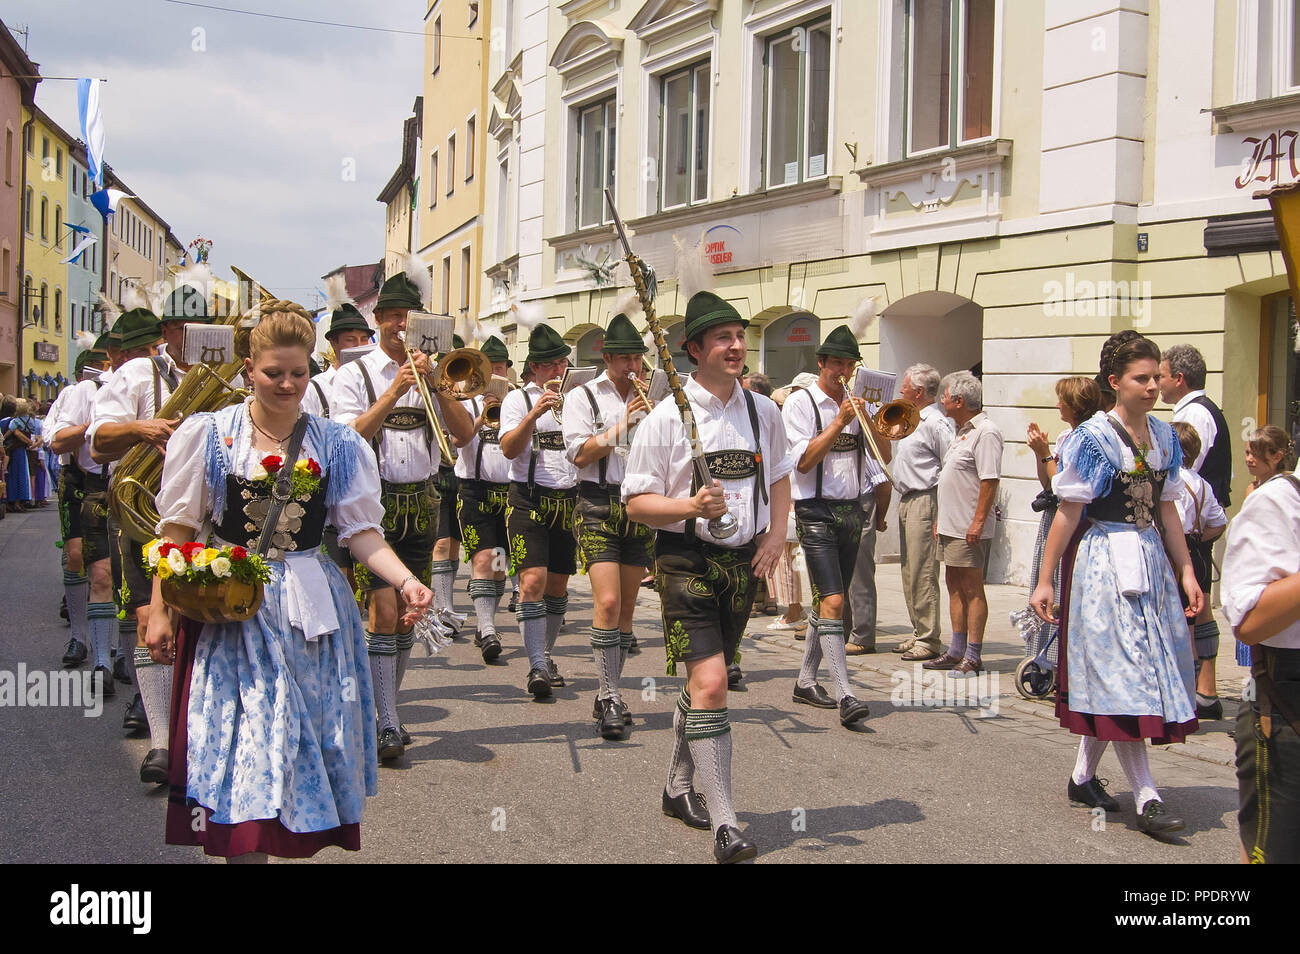 Musica in ottone - Inzell Music Band a una processione in Teisendorf. Foto Stock